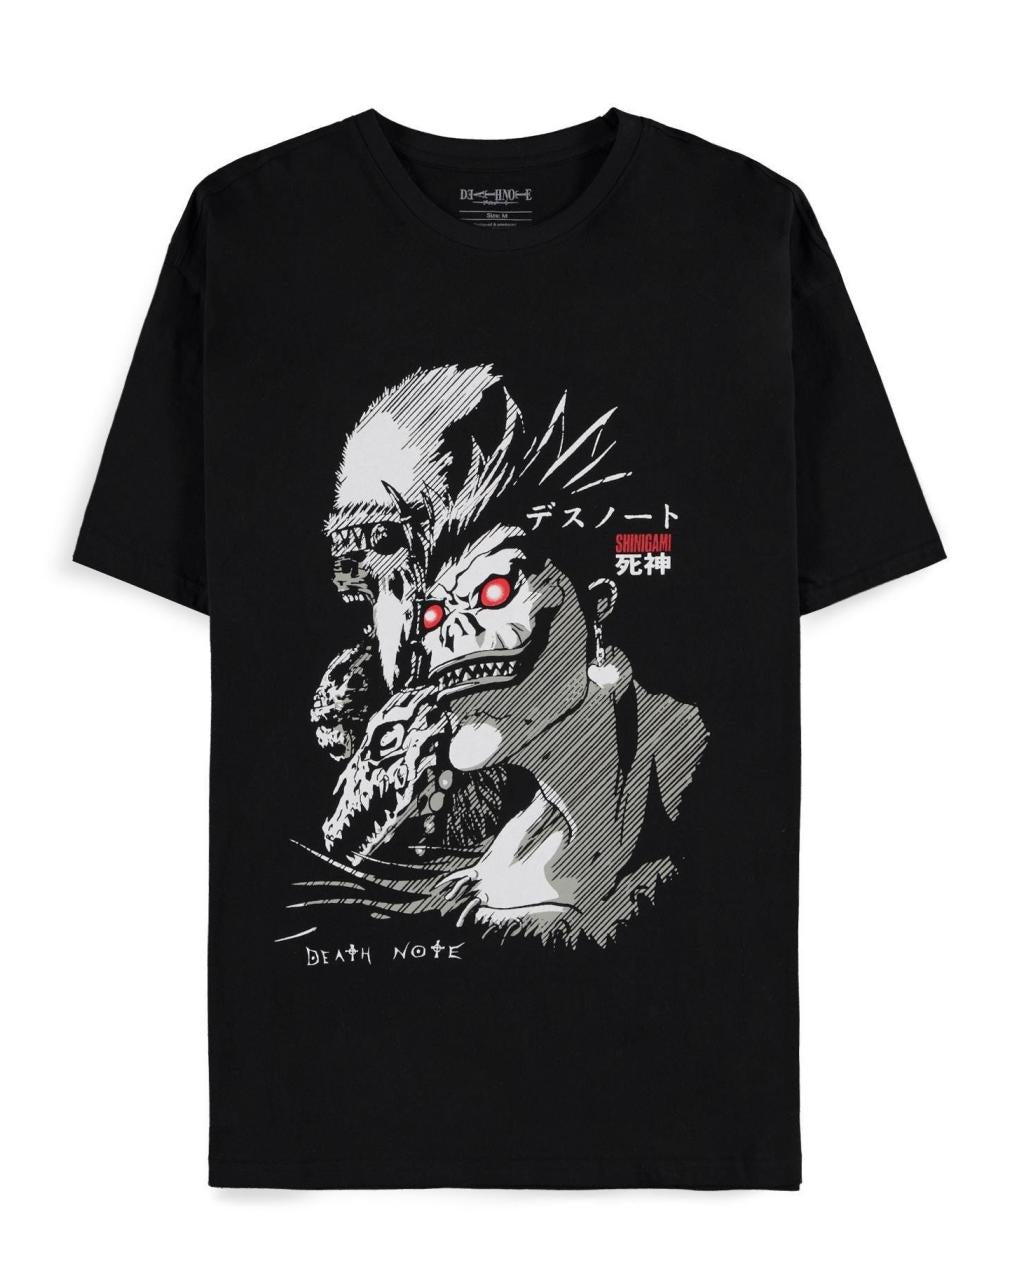 DEATH NOTE - Shinigami Demon Crew - Men's T-shirt (S)